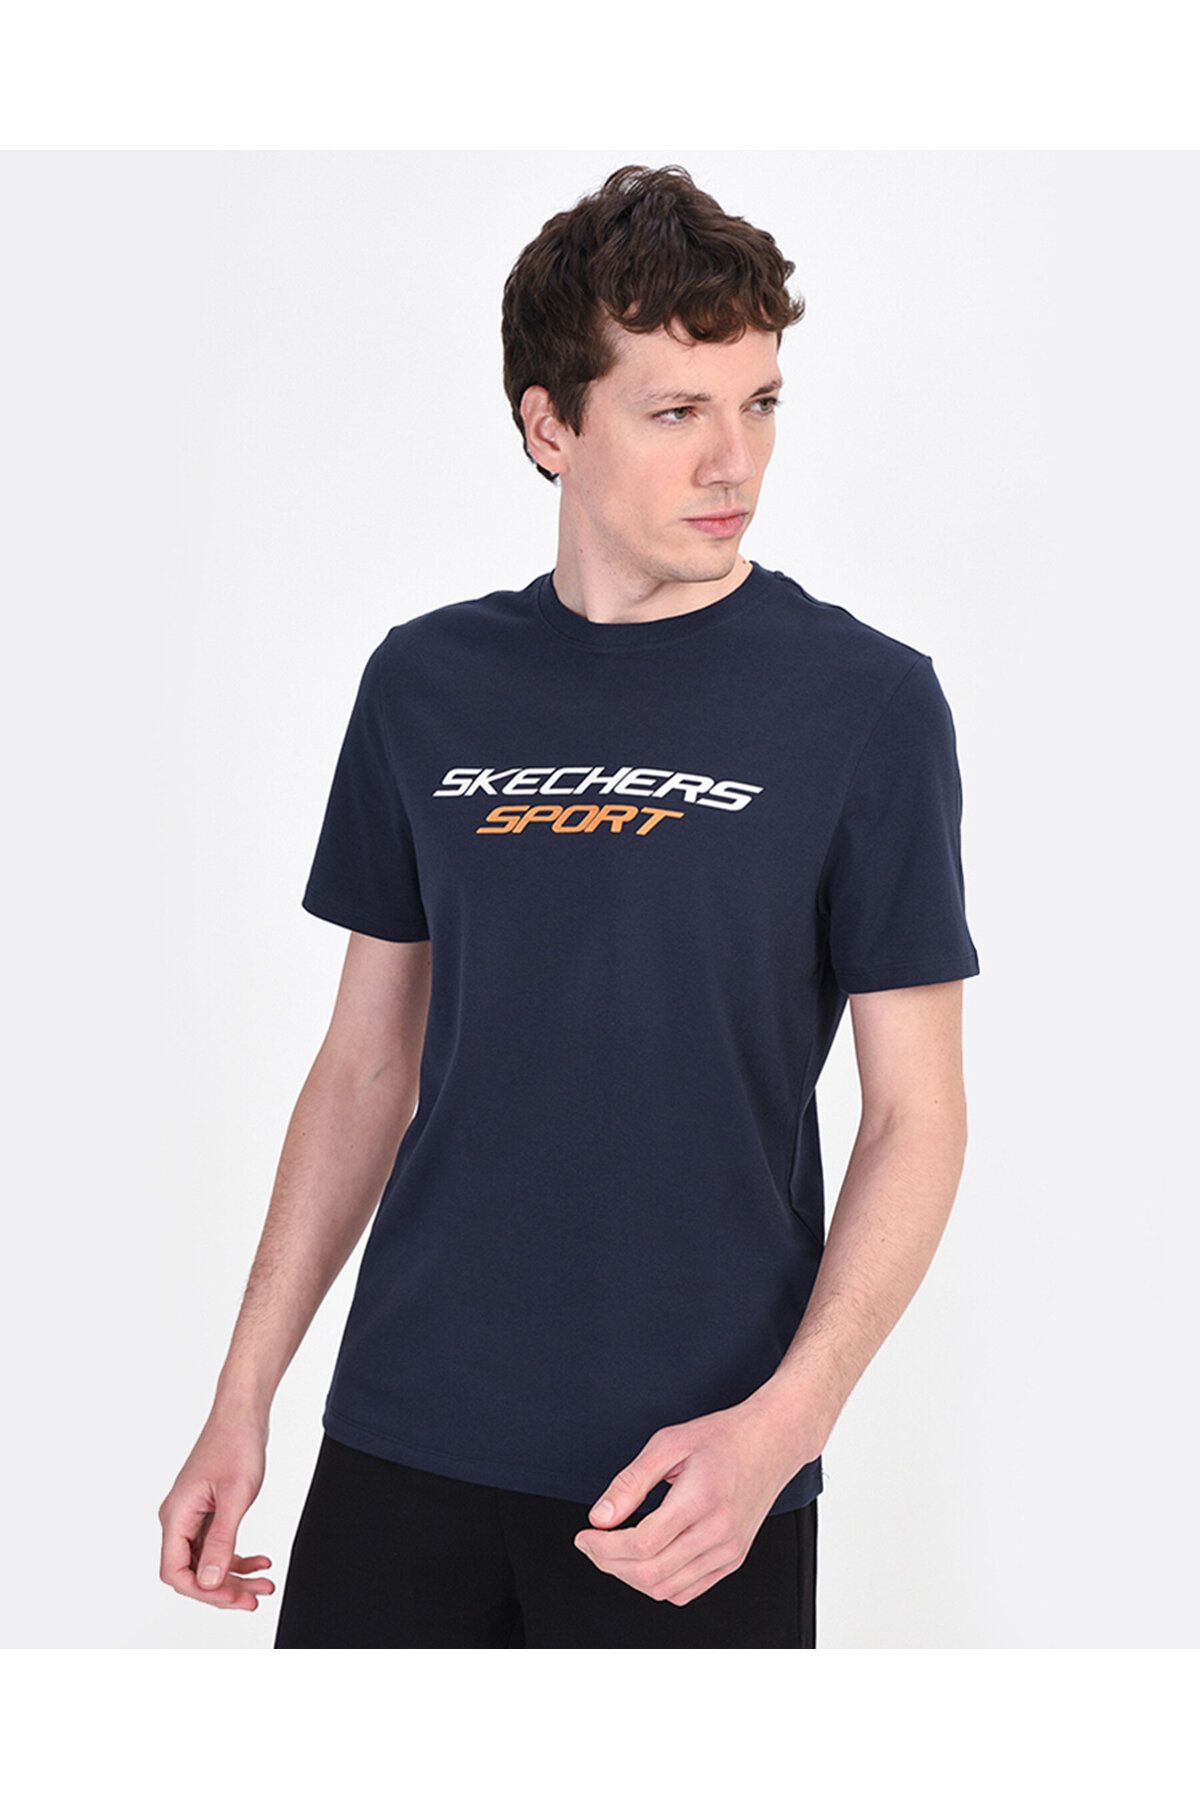 Skechers Graphic Tee's M Sport Base Print Erkek Lacivert Tshirt S201200-410